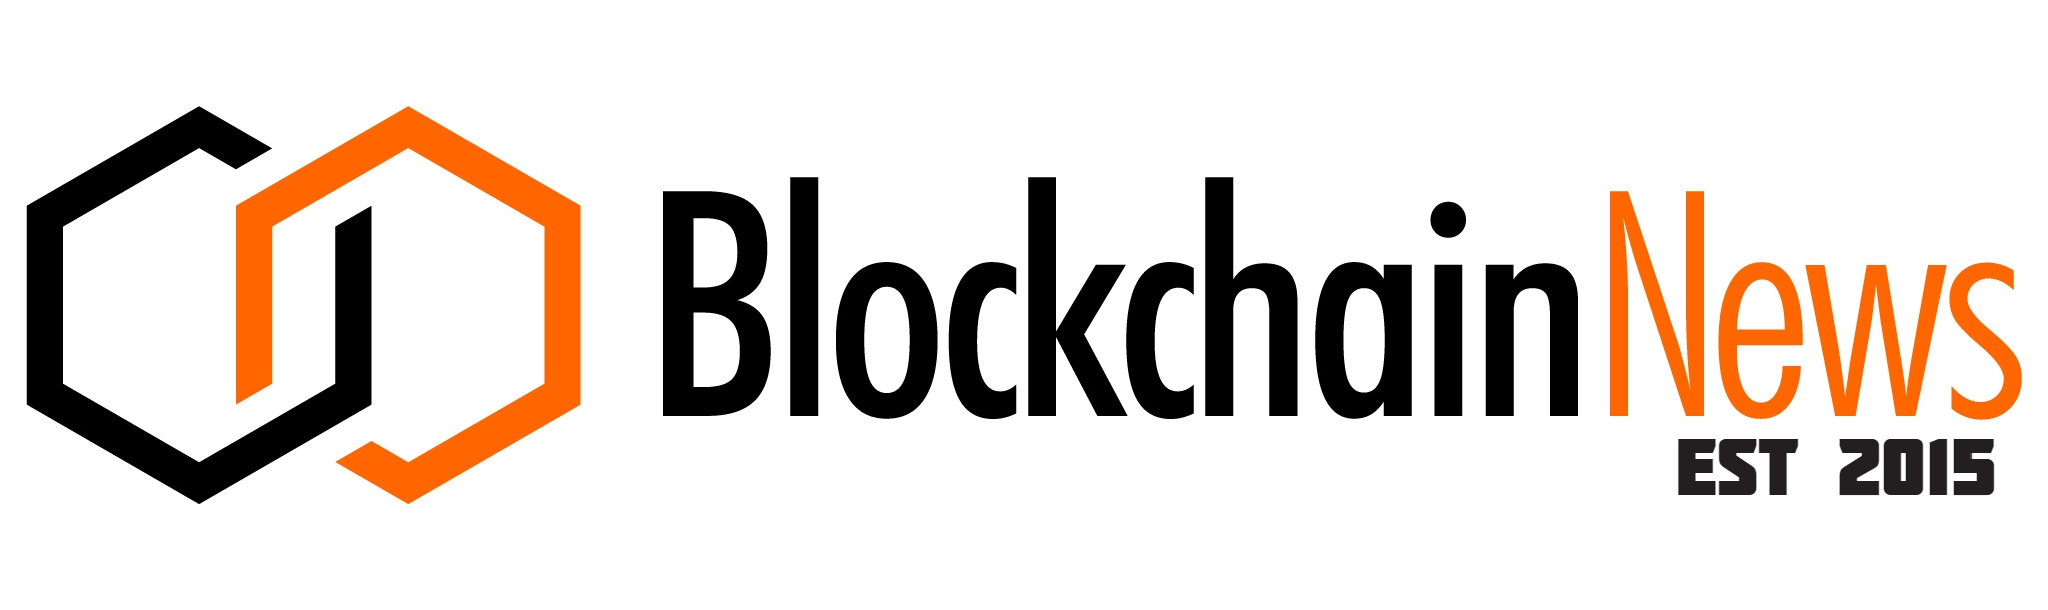 pccrackbox – Blockchain News, Opinion, TV and Jobs